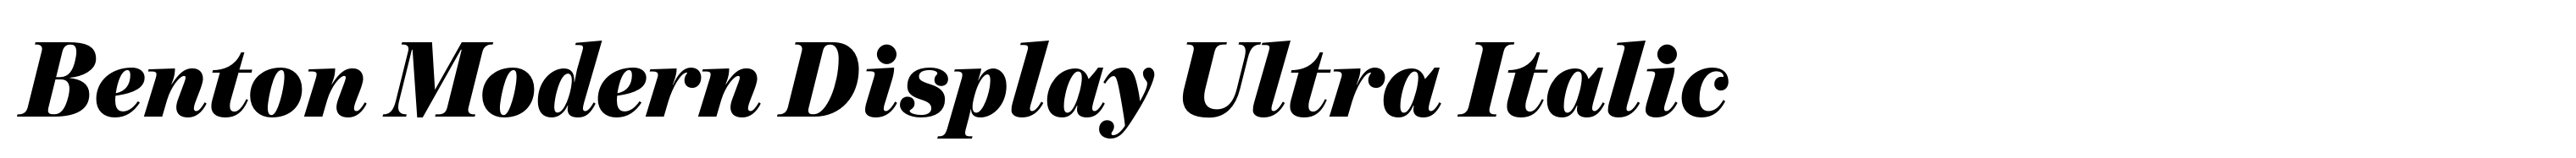 Benton Modern Display Ultra Italic